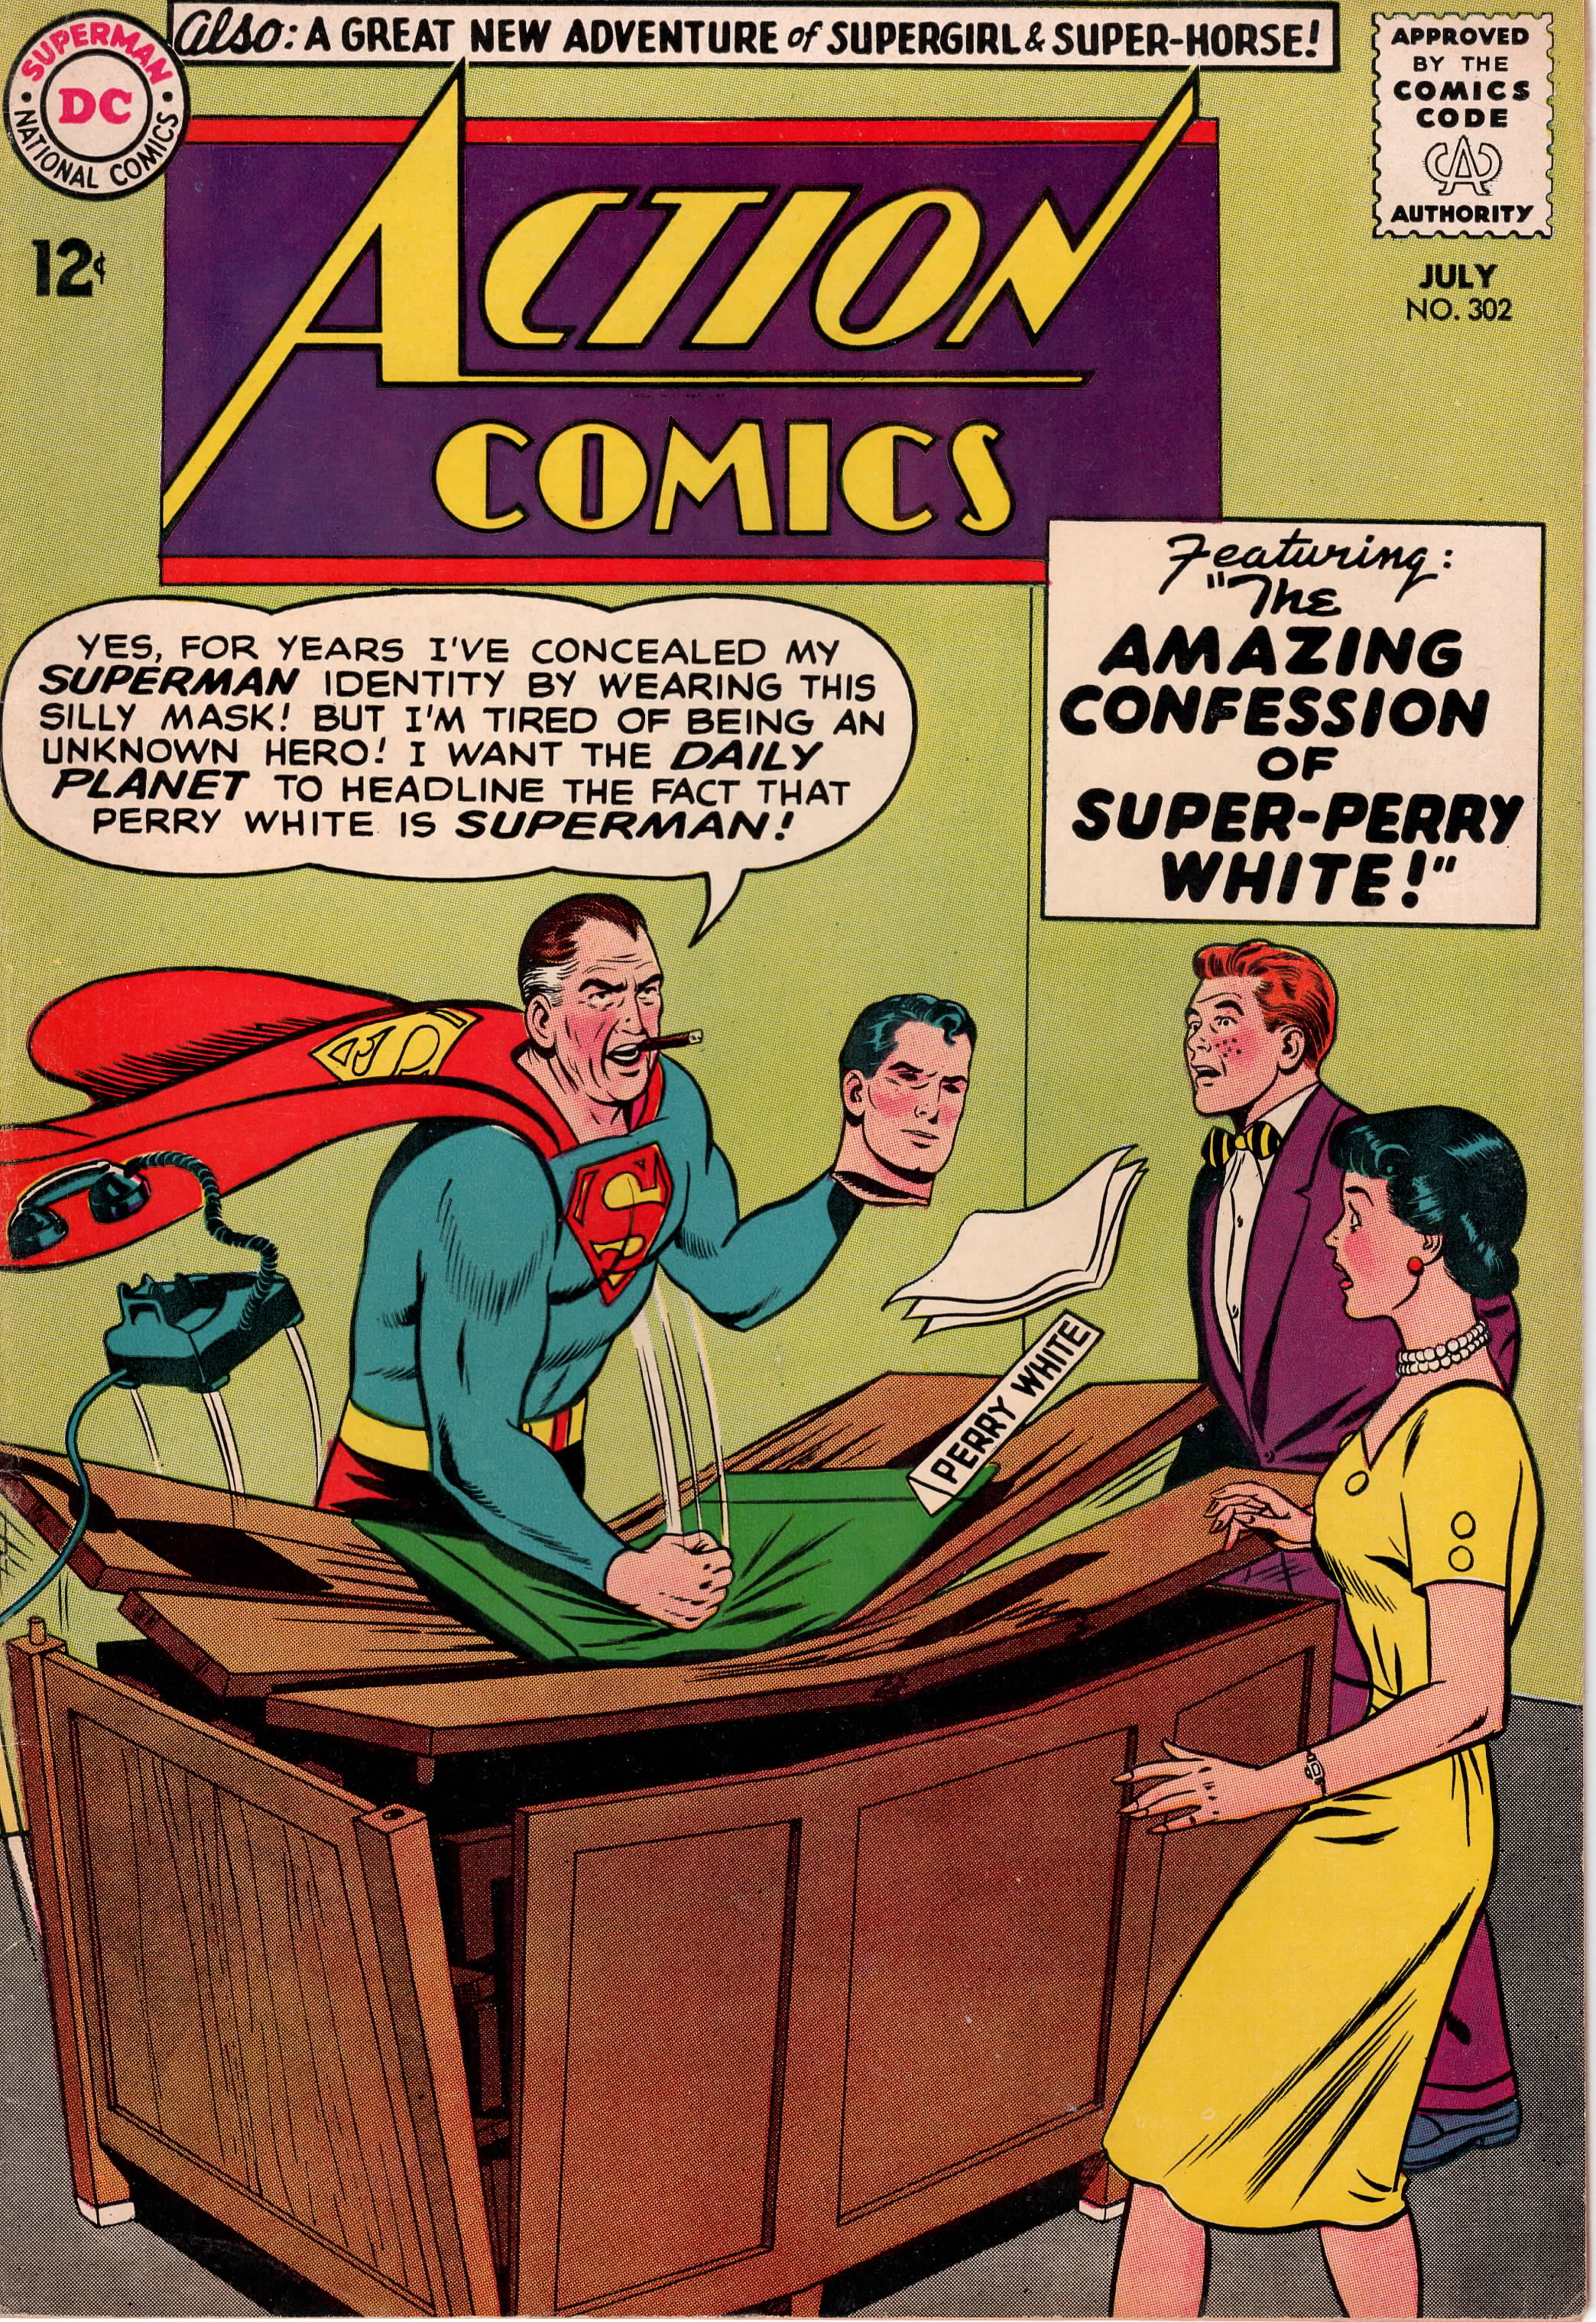 Action Comics #302